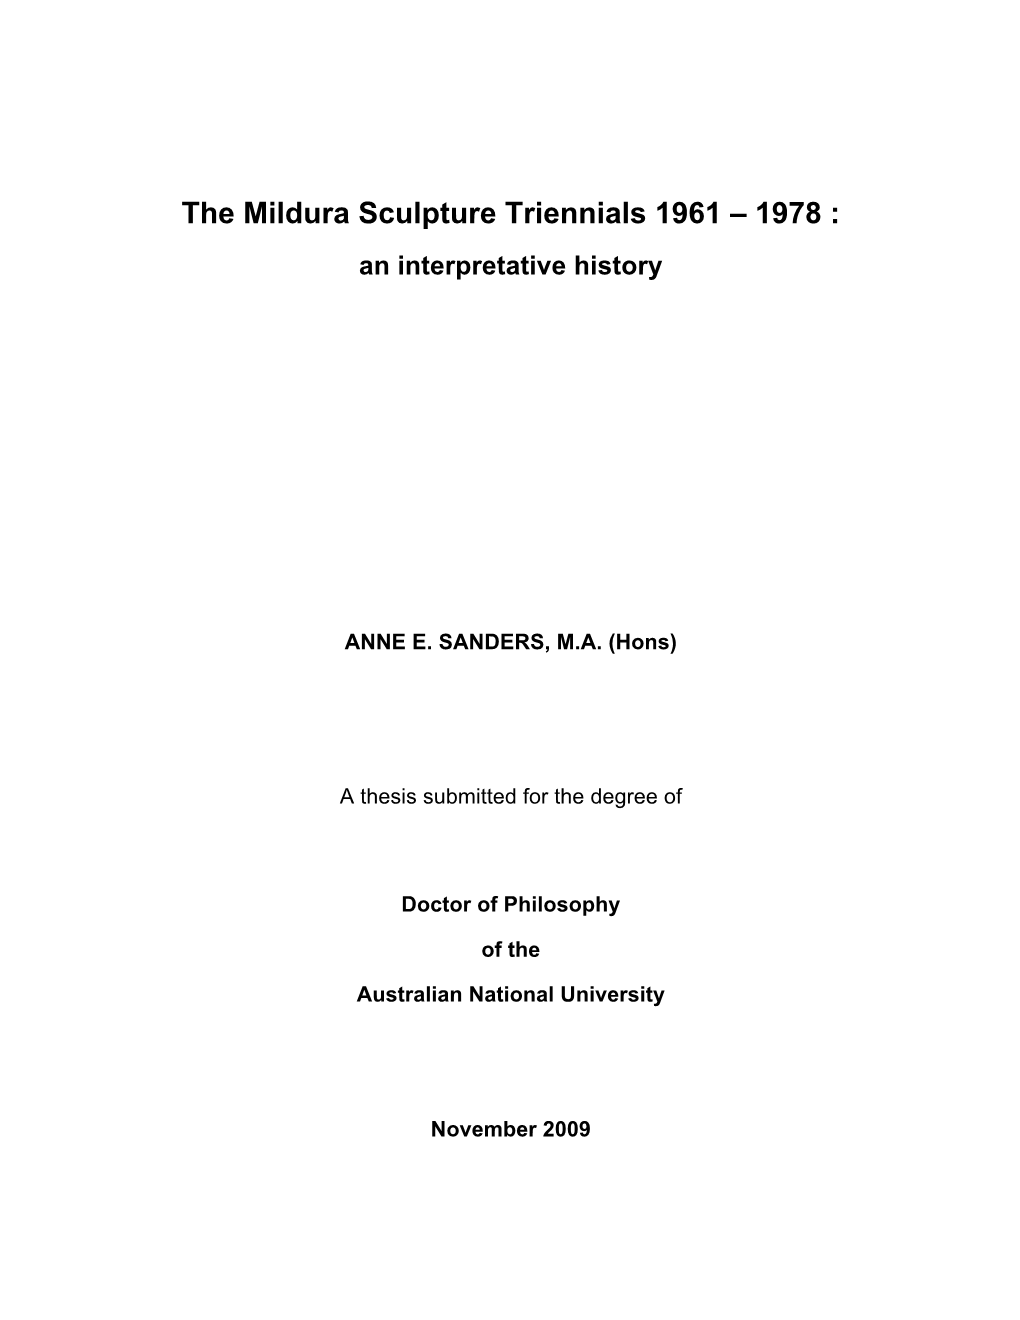 The Mildura Sculpture Triennials 1961 – 1978 : an Interpretative History